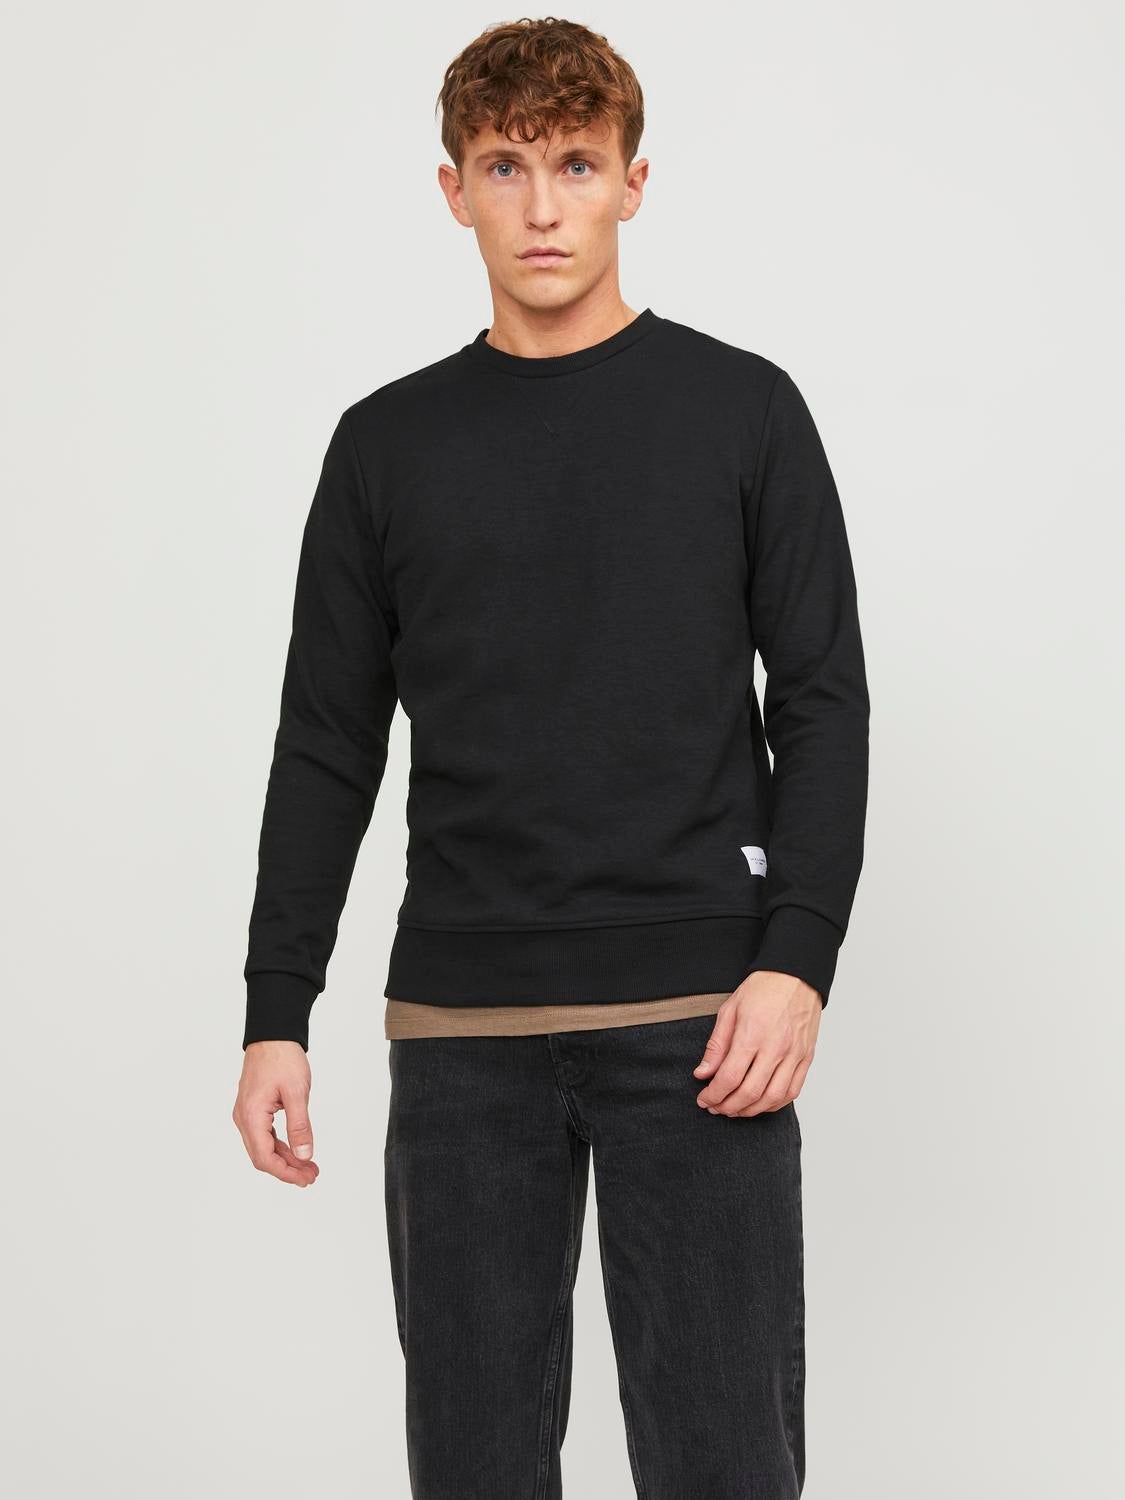 Jack & Jones sweatshirt MEN FASHION Jumpers & Sweatshirts Hoodless discount 56% Green L 